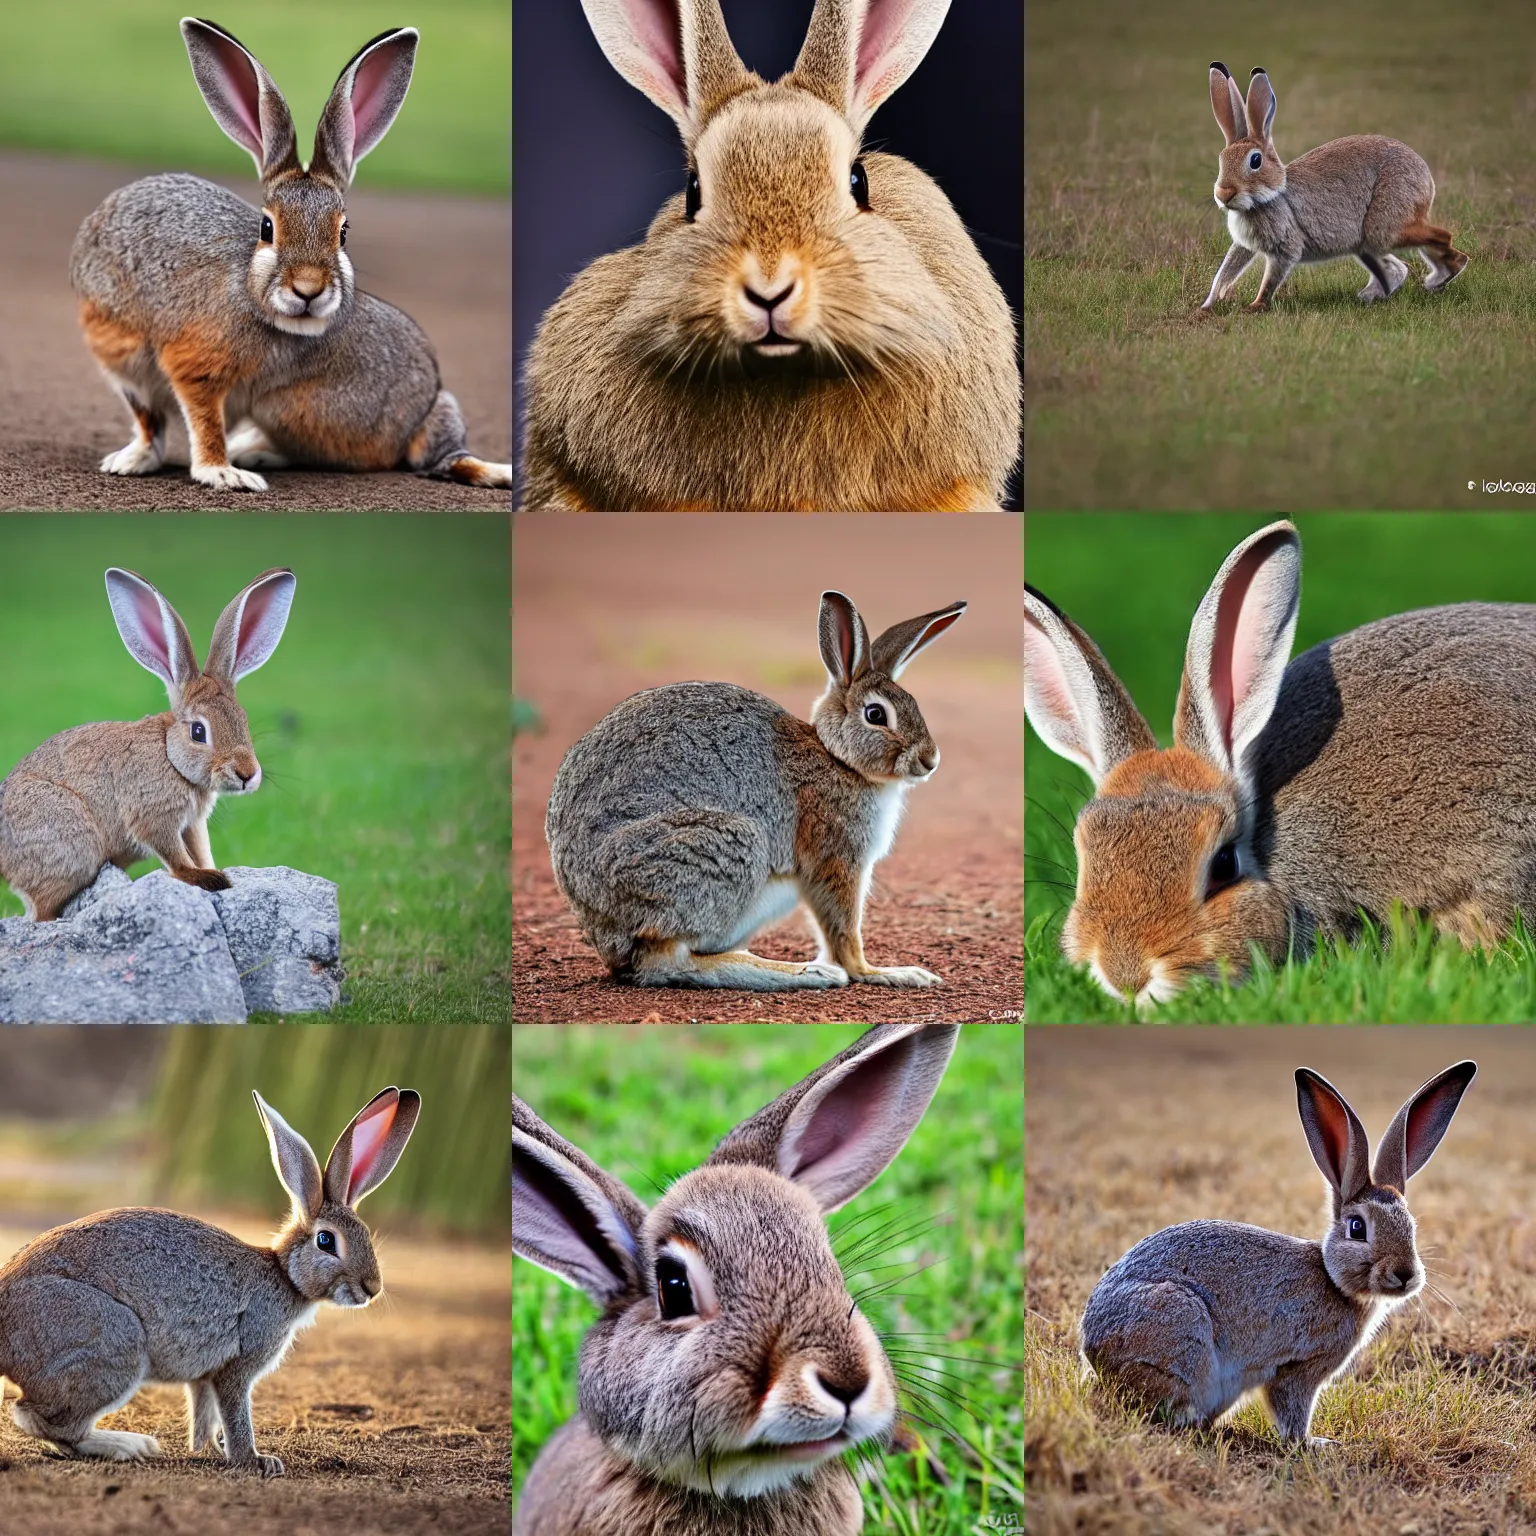 Prompt: photograph of a rabbit kangaroo, 4 k, award winning photo